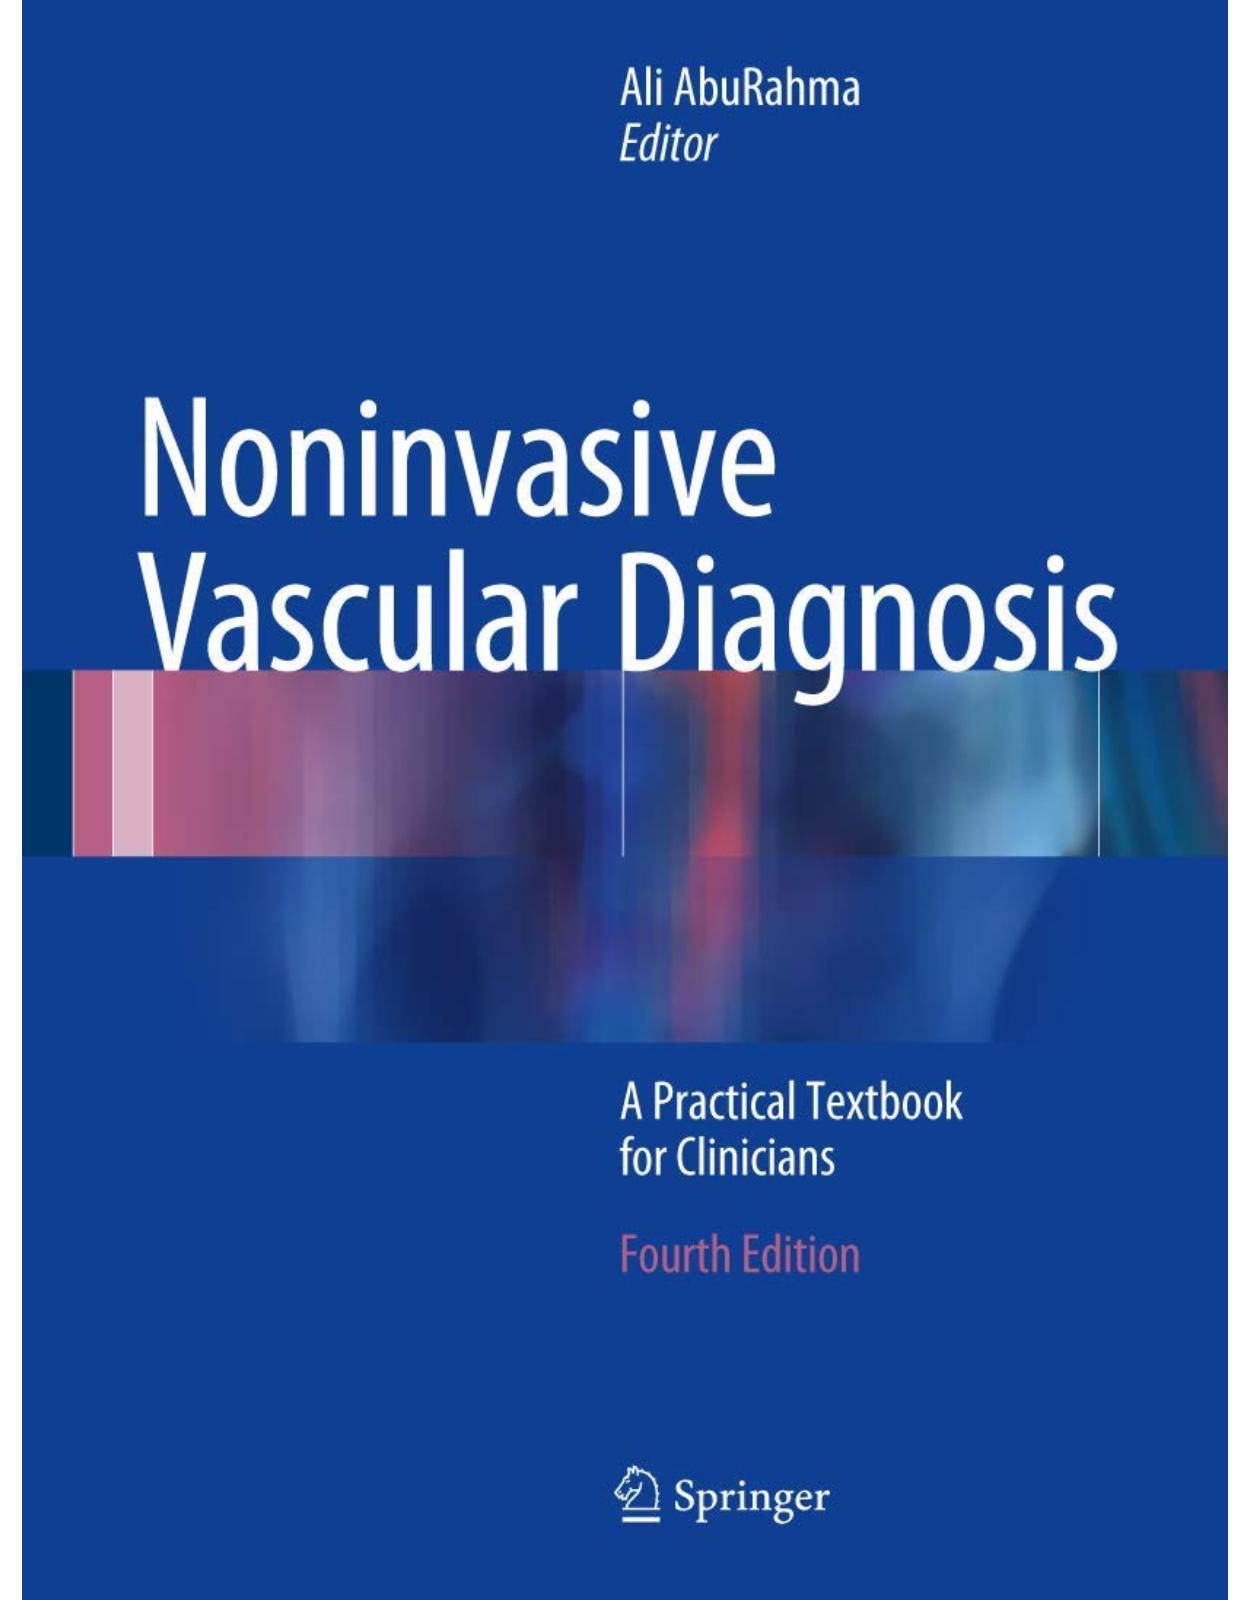 Noninvasive Vascular Diagnosis: A Practical Textbook for Clinicians 